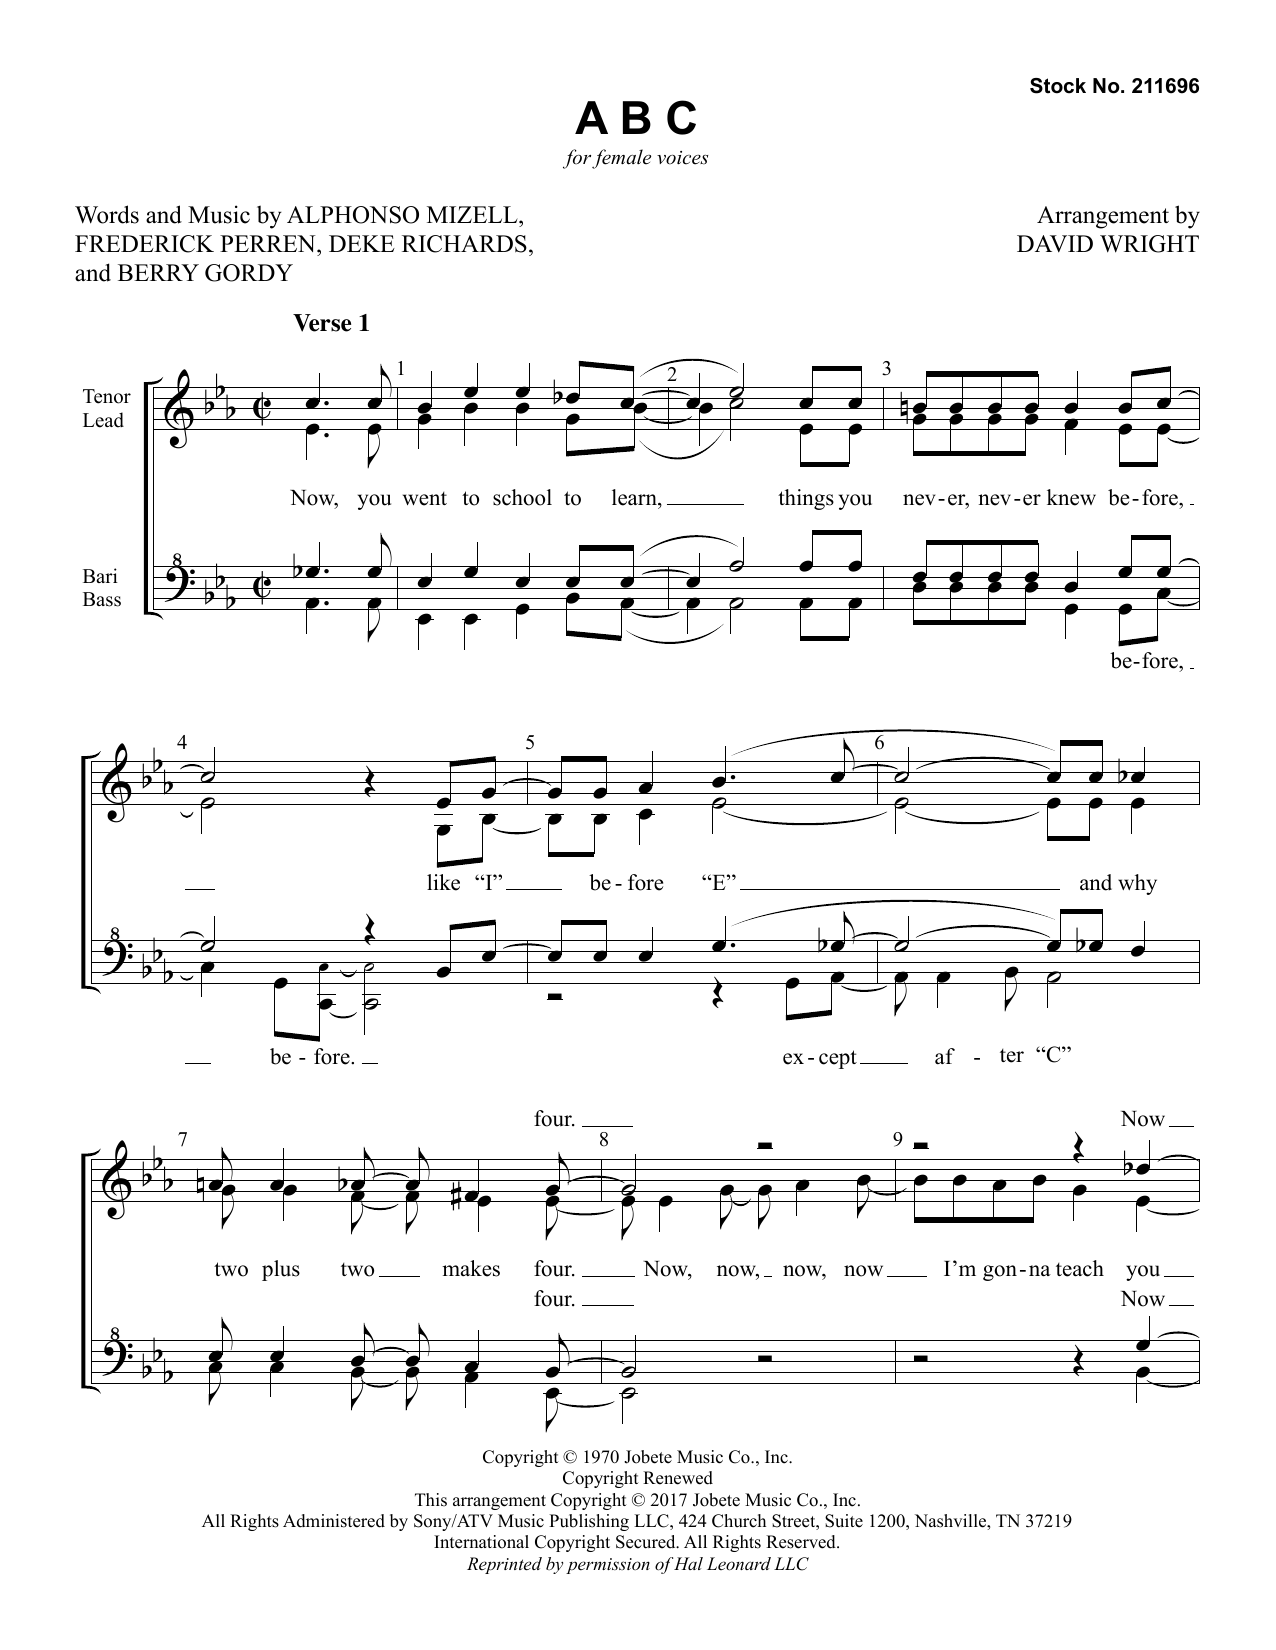 Jackson 5 ABC (arr. David Wright) Sheet Music Notes & Chords for SATB Choir - Download or Print PDF